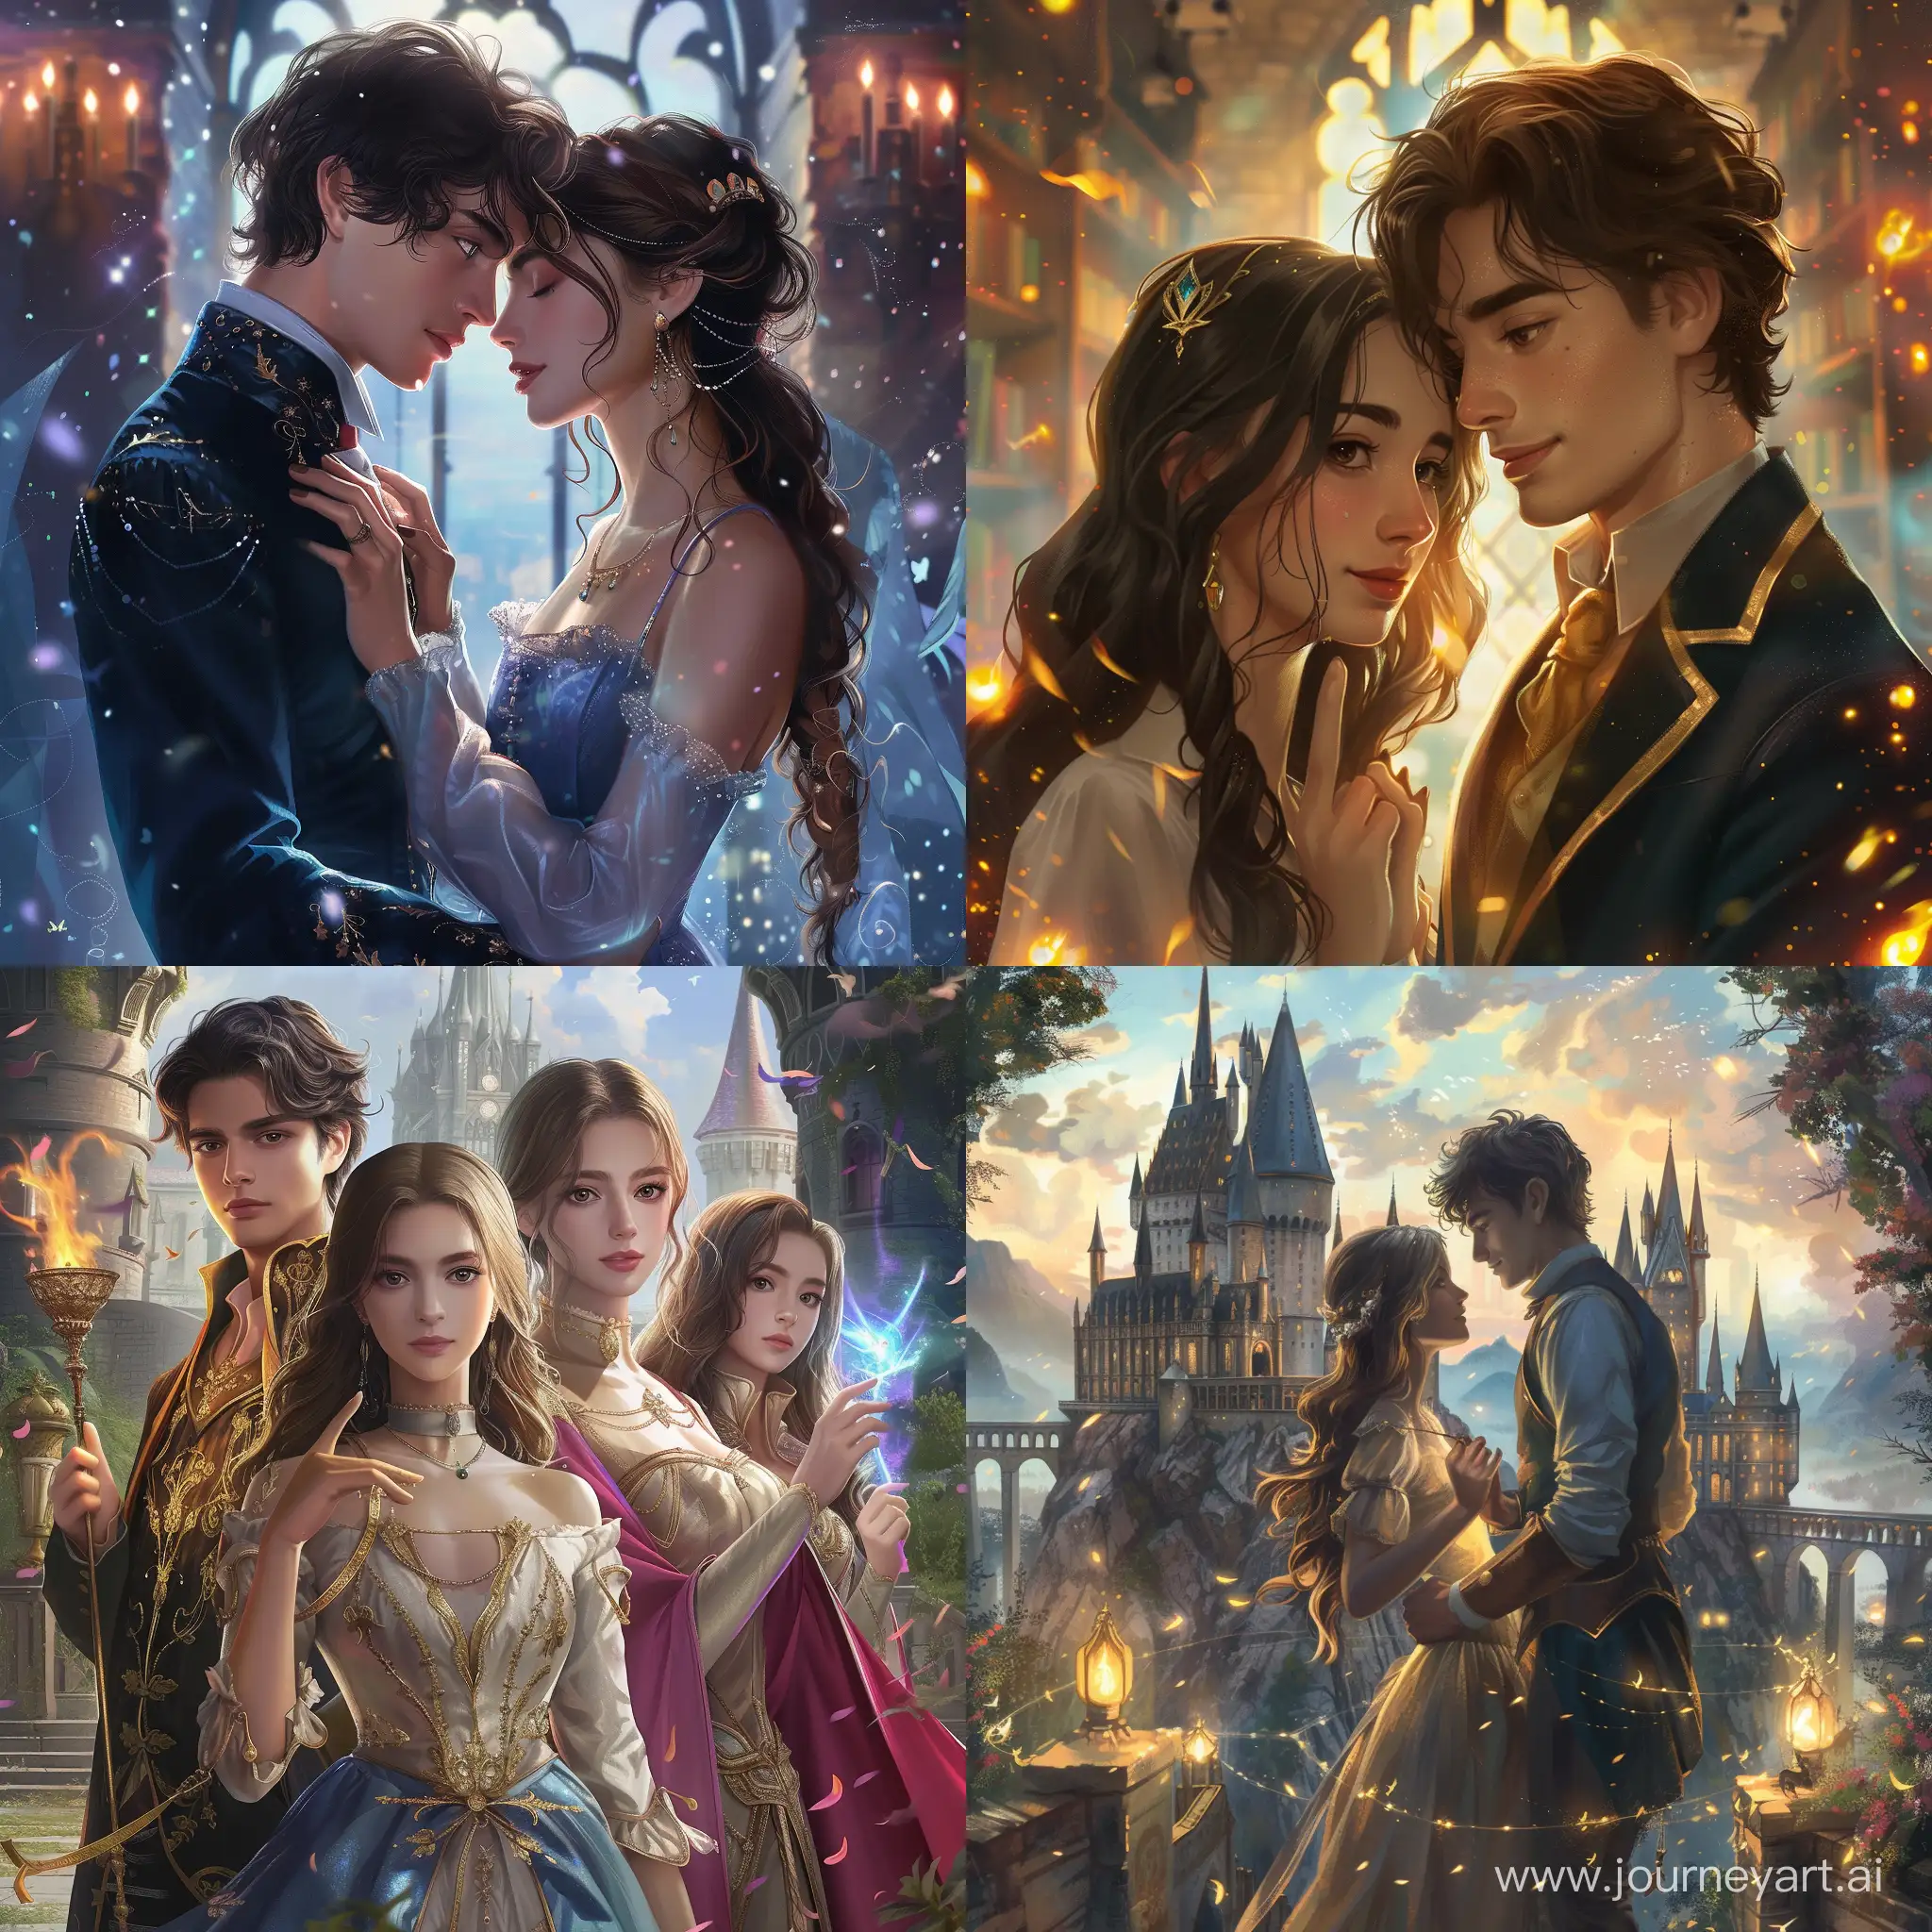 Enchanting-Love-Story-at-the-Fantasy-Romance-Academy